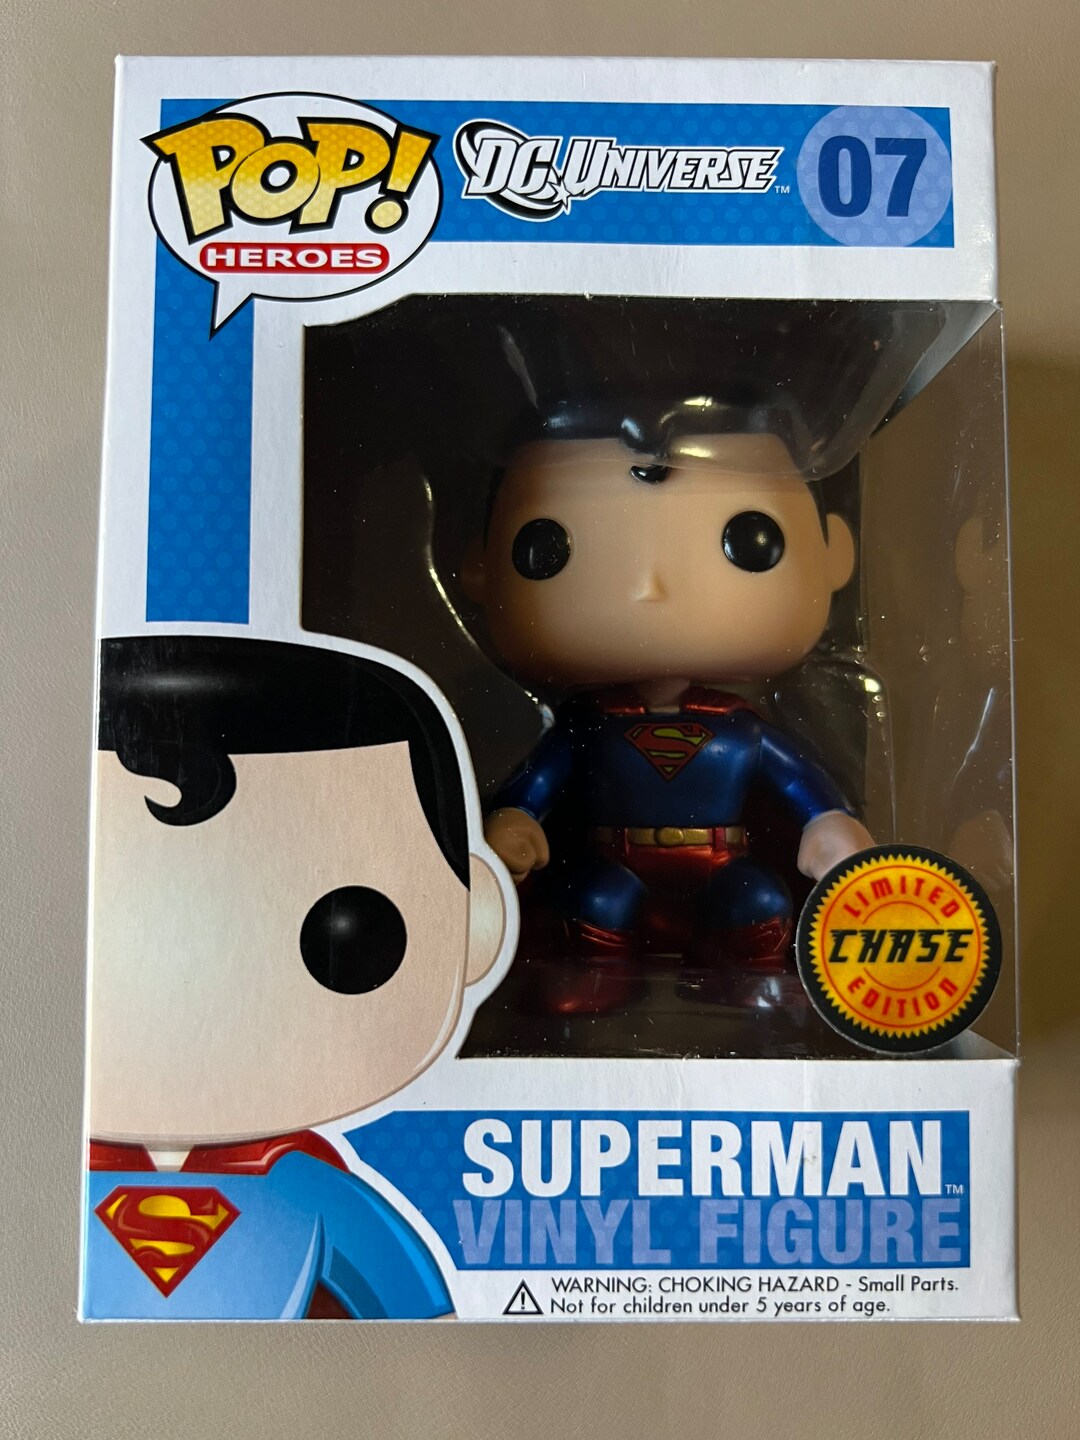 Funko Pop Superman Classic #07 Rare 2011 Release DC Super Heroes